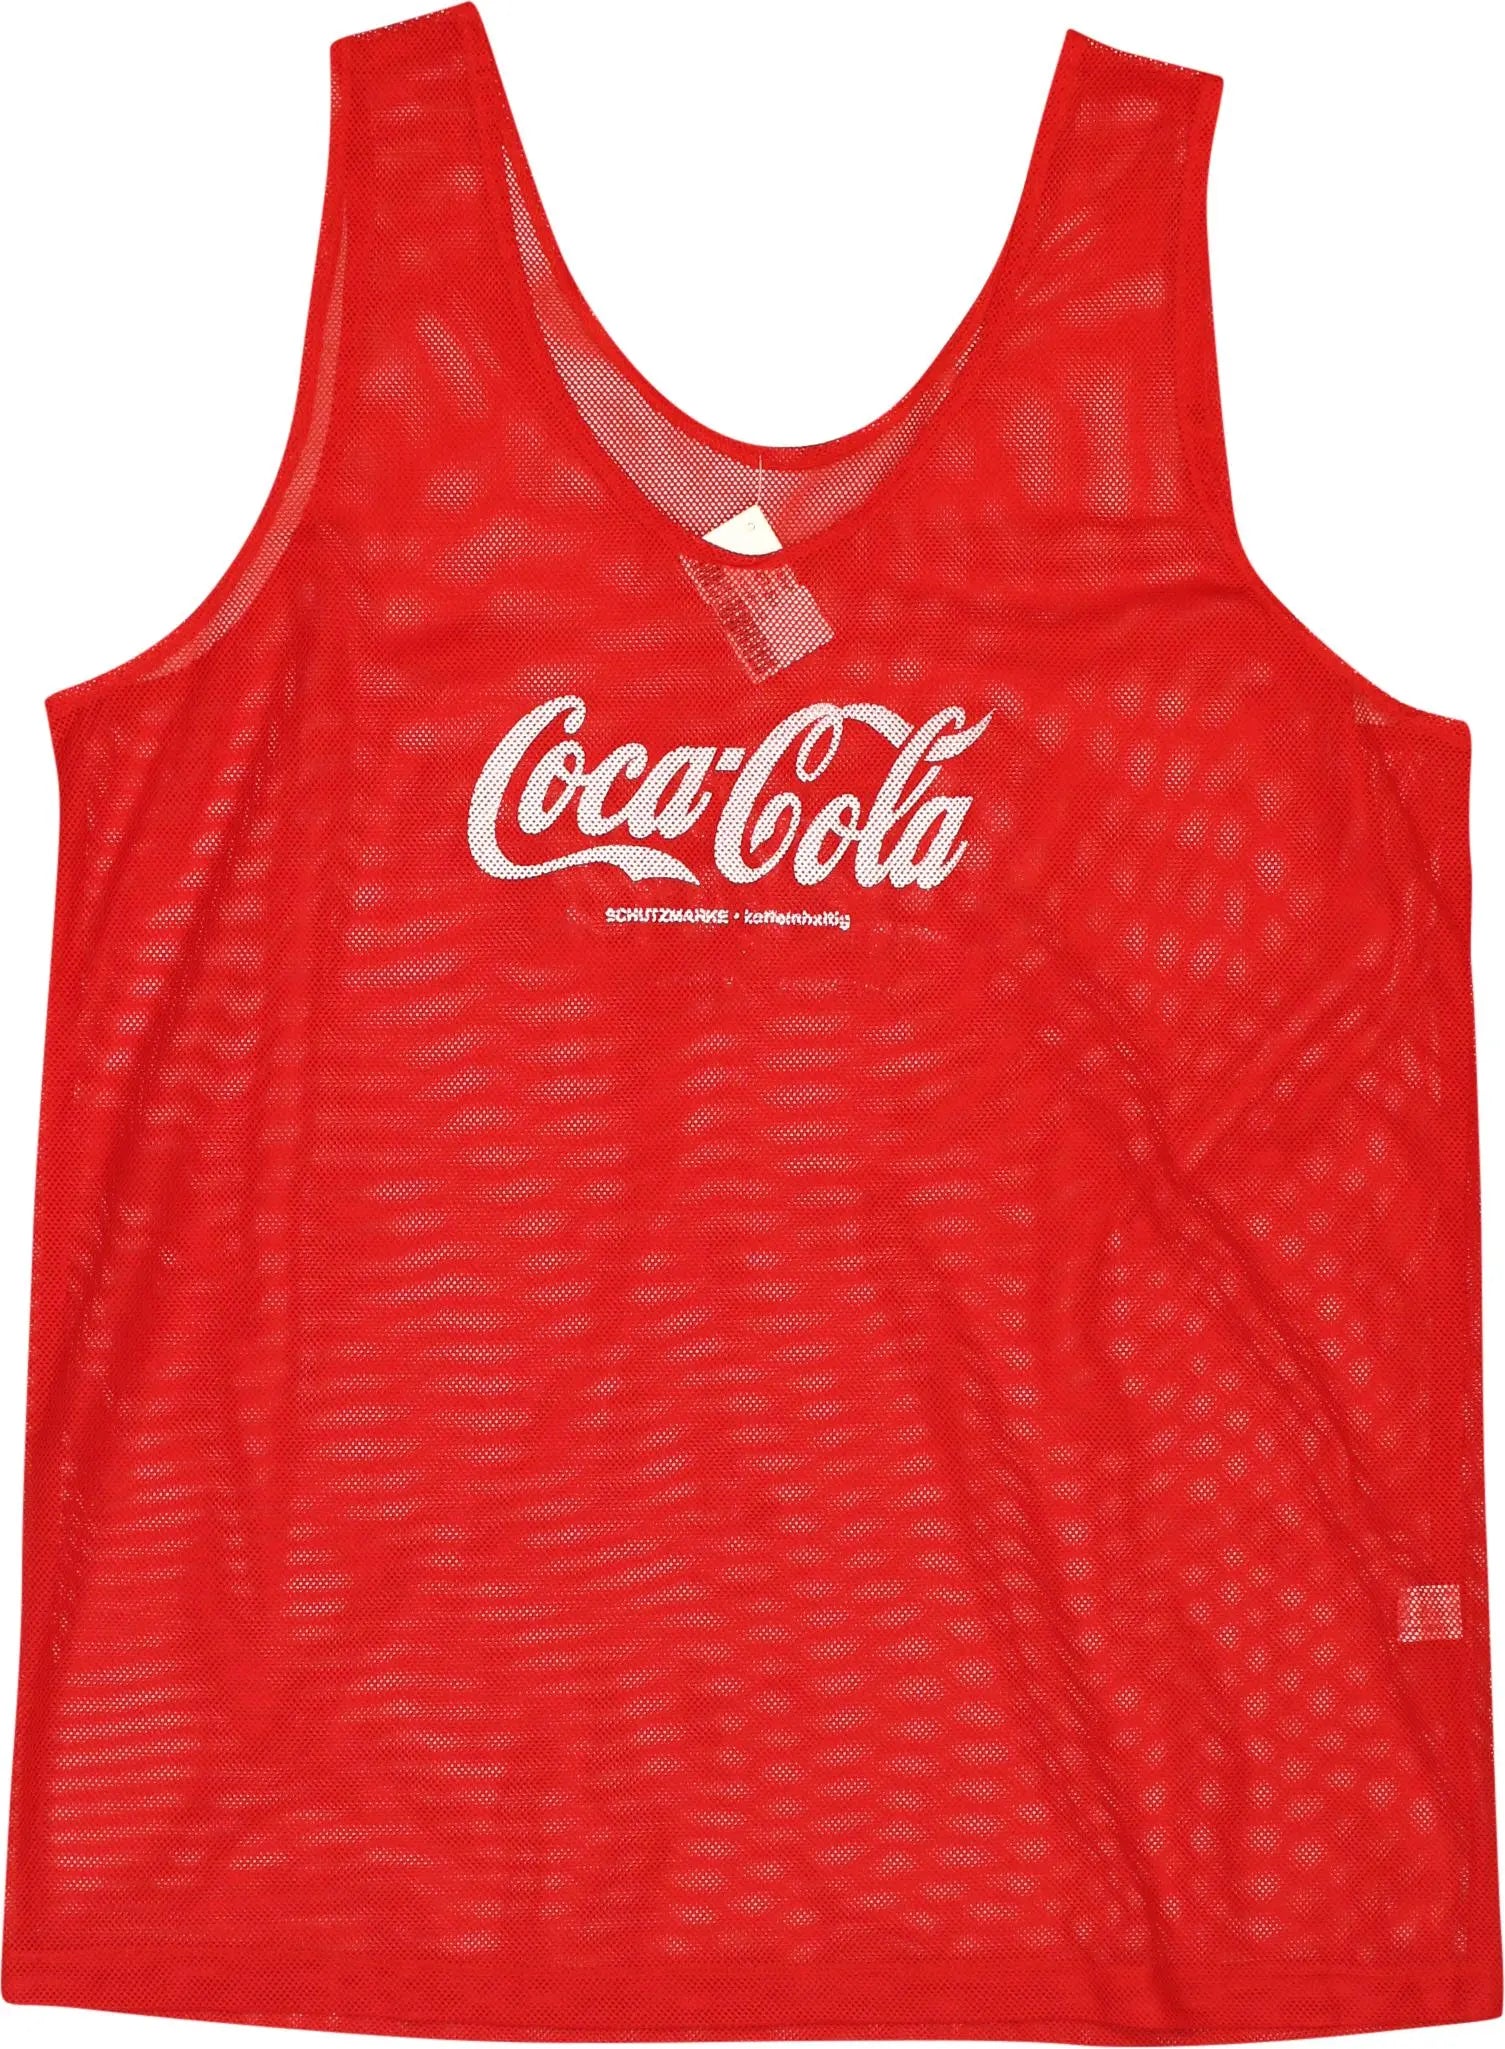 Coca Cola - Coca Cola Tank Top- ThriftTale.com - Vintage and second handclothing